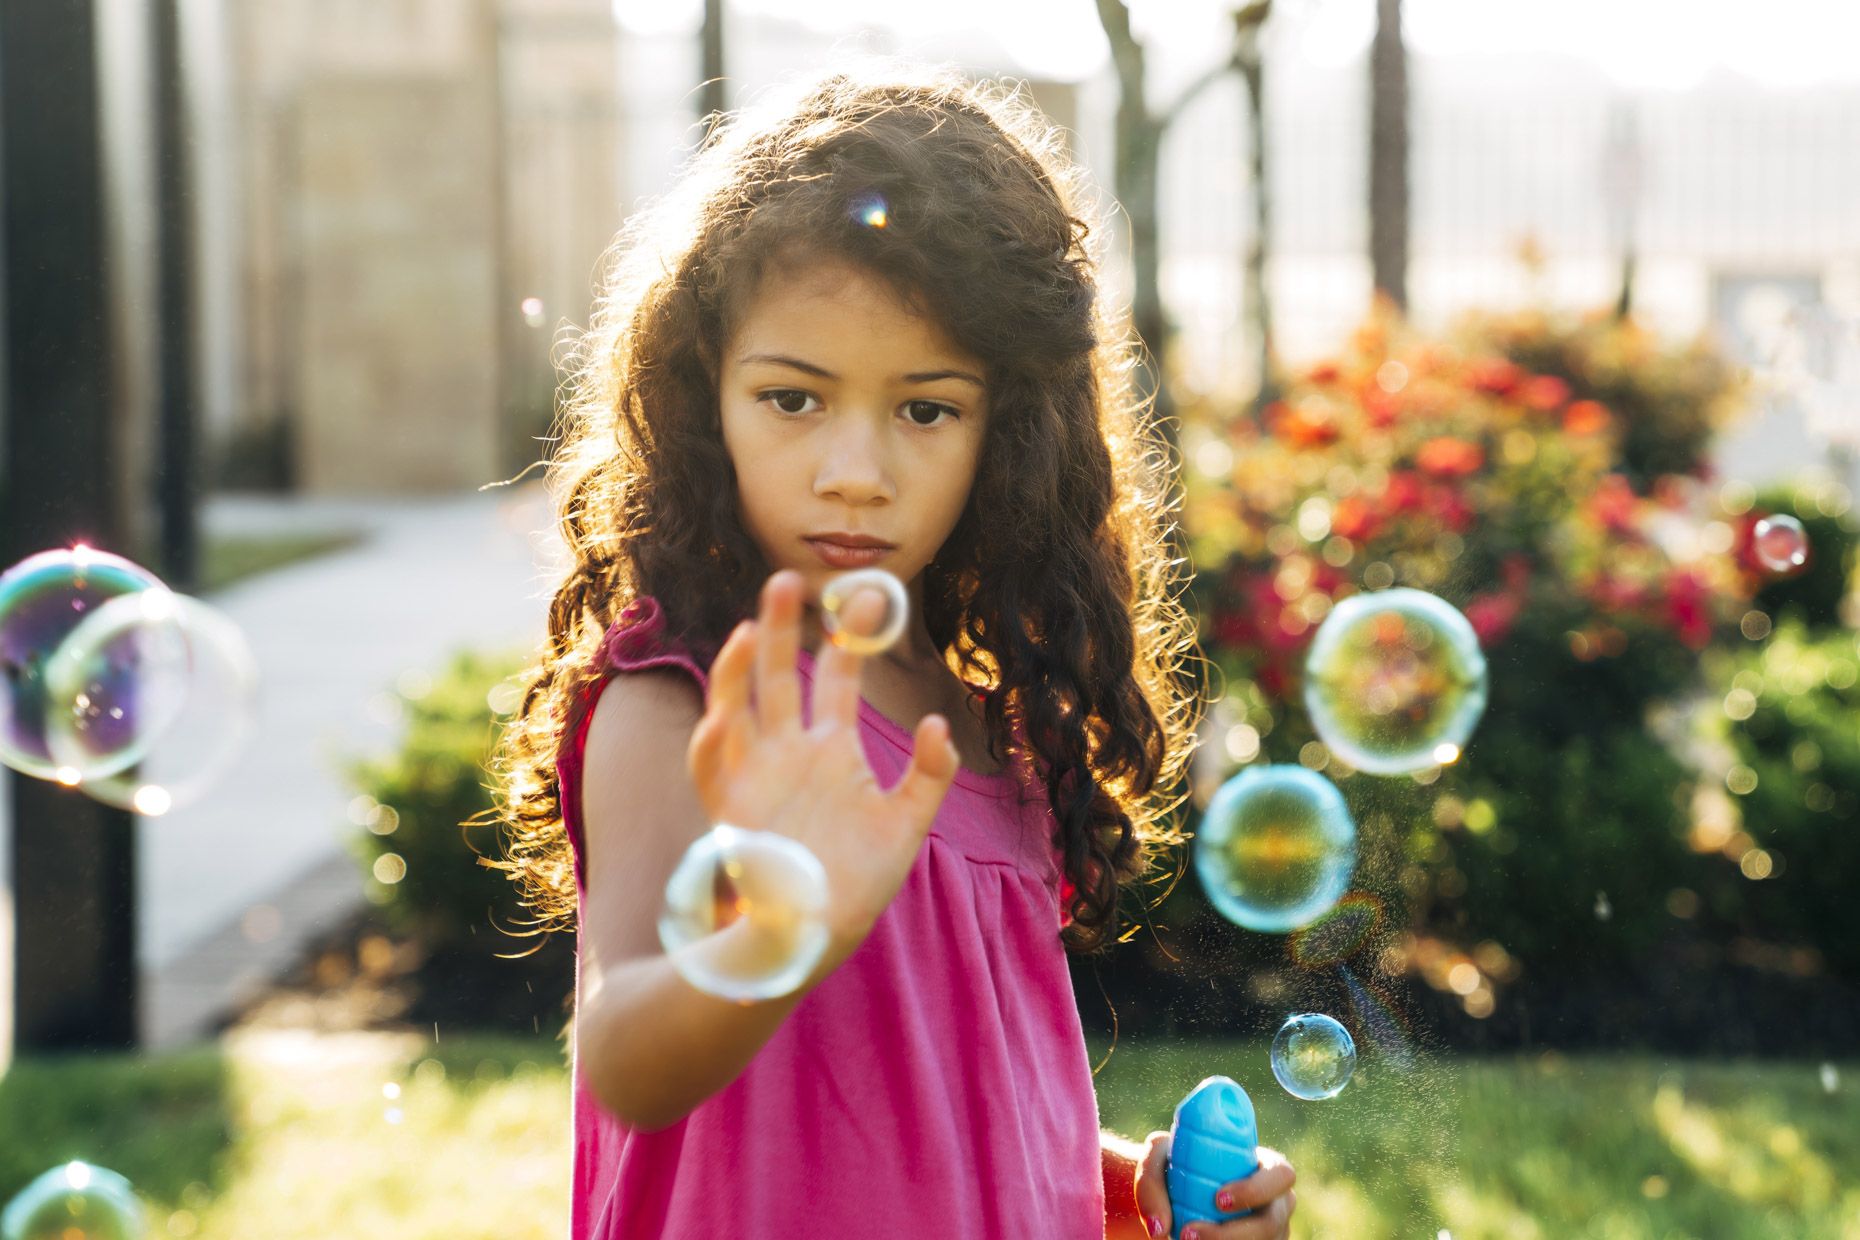 Hispanic girl popping bubbles outside in park